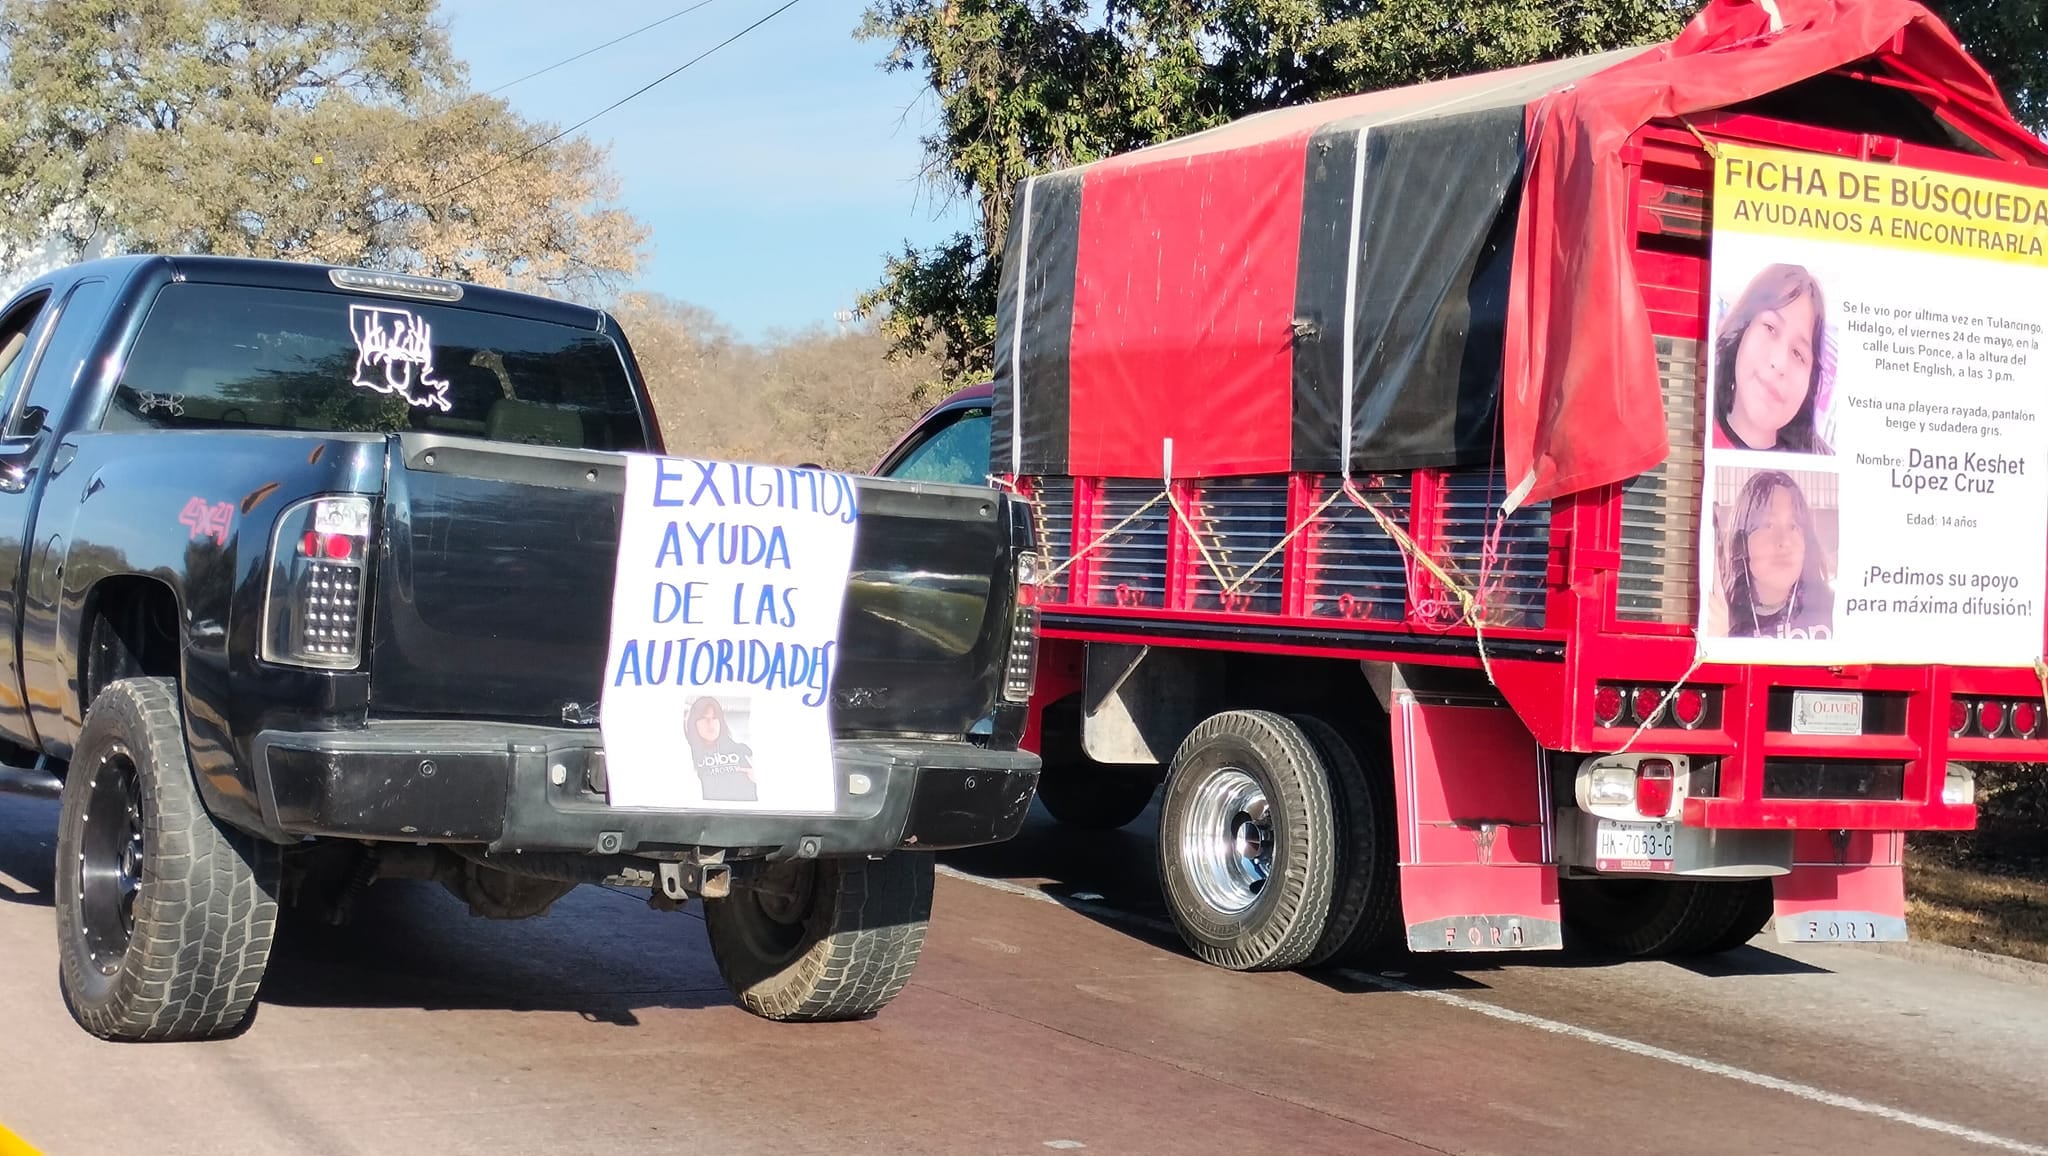 Bloqueo en la carretera México-Tuxpan por desaparición de Dana Keshet